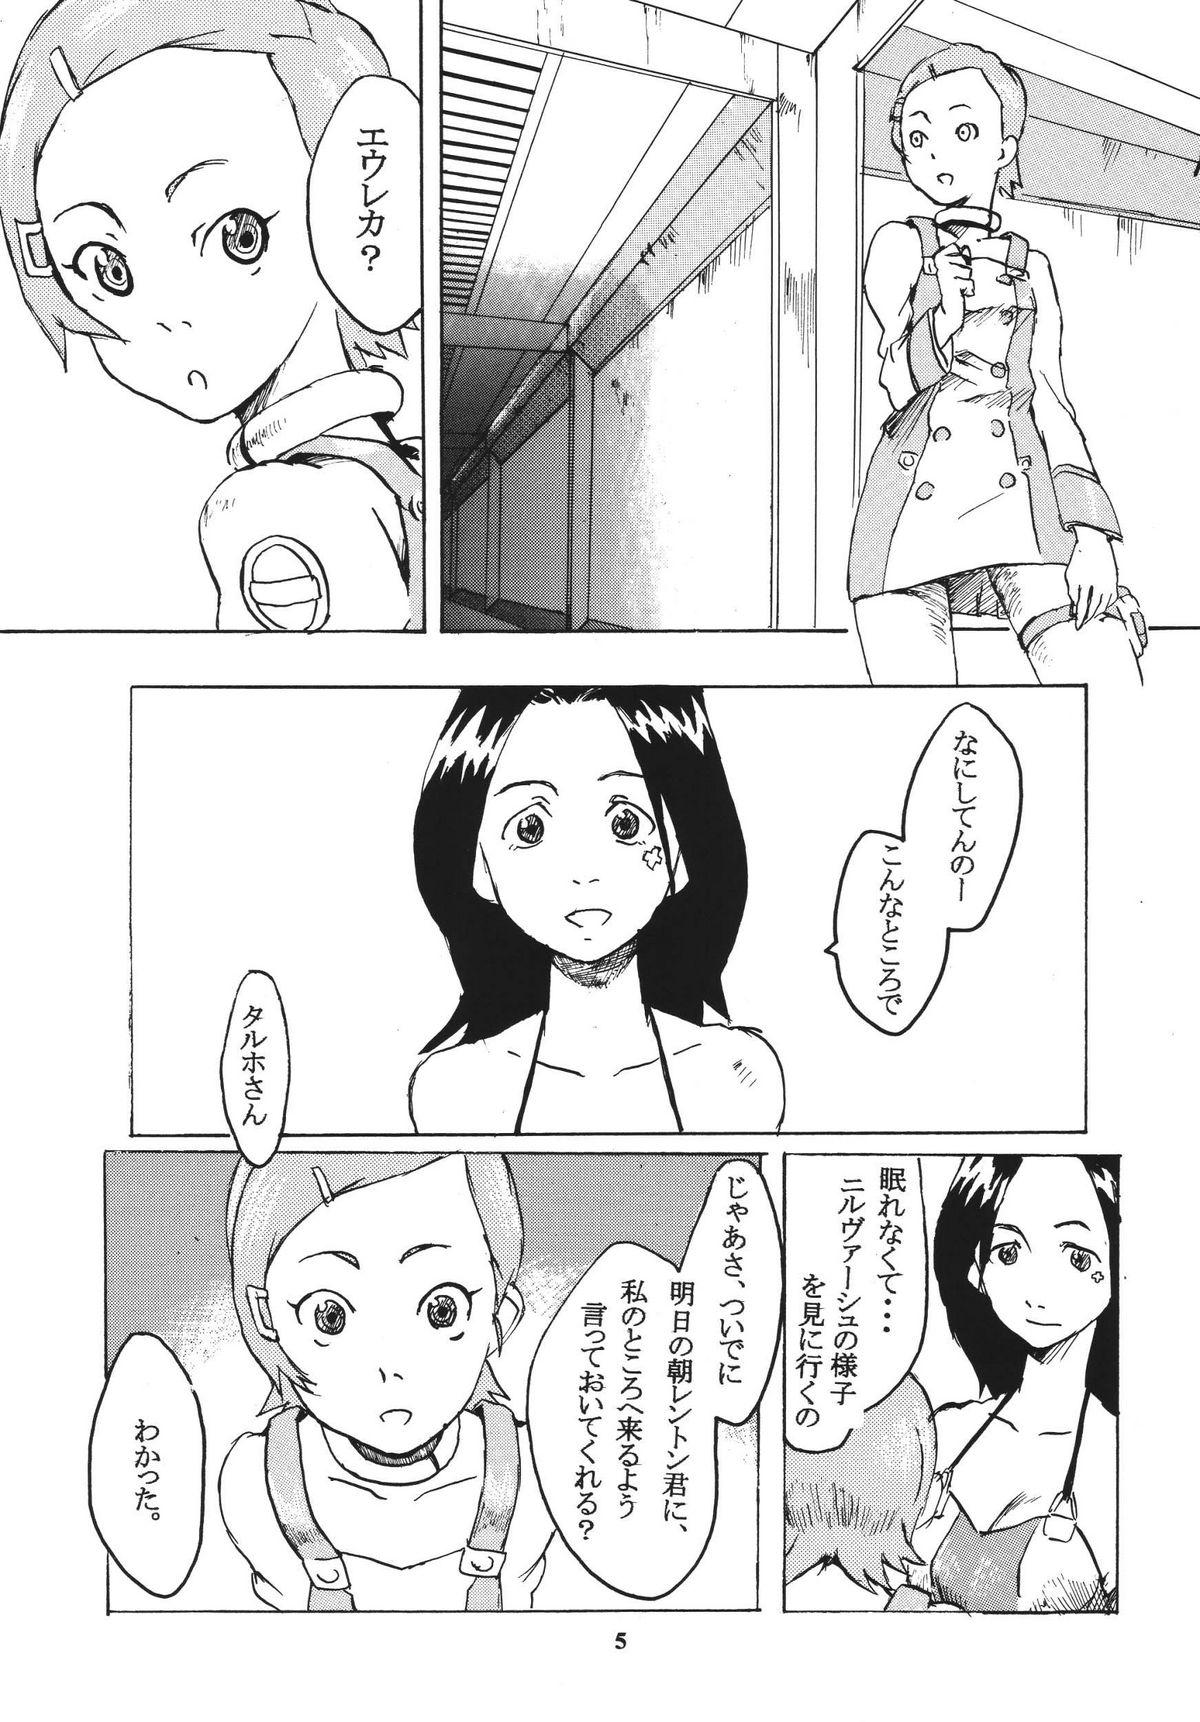 Ass Lick Gekko Tsushin 1 - Eureka 7 Weird - Page 4